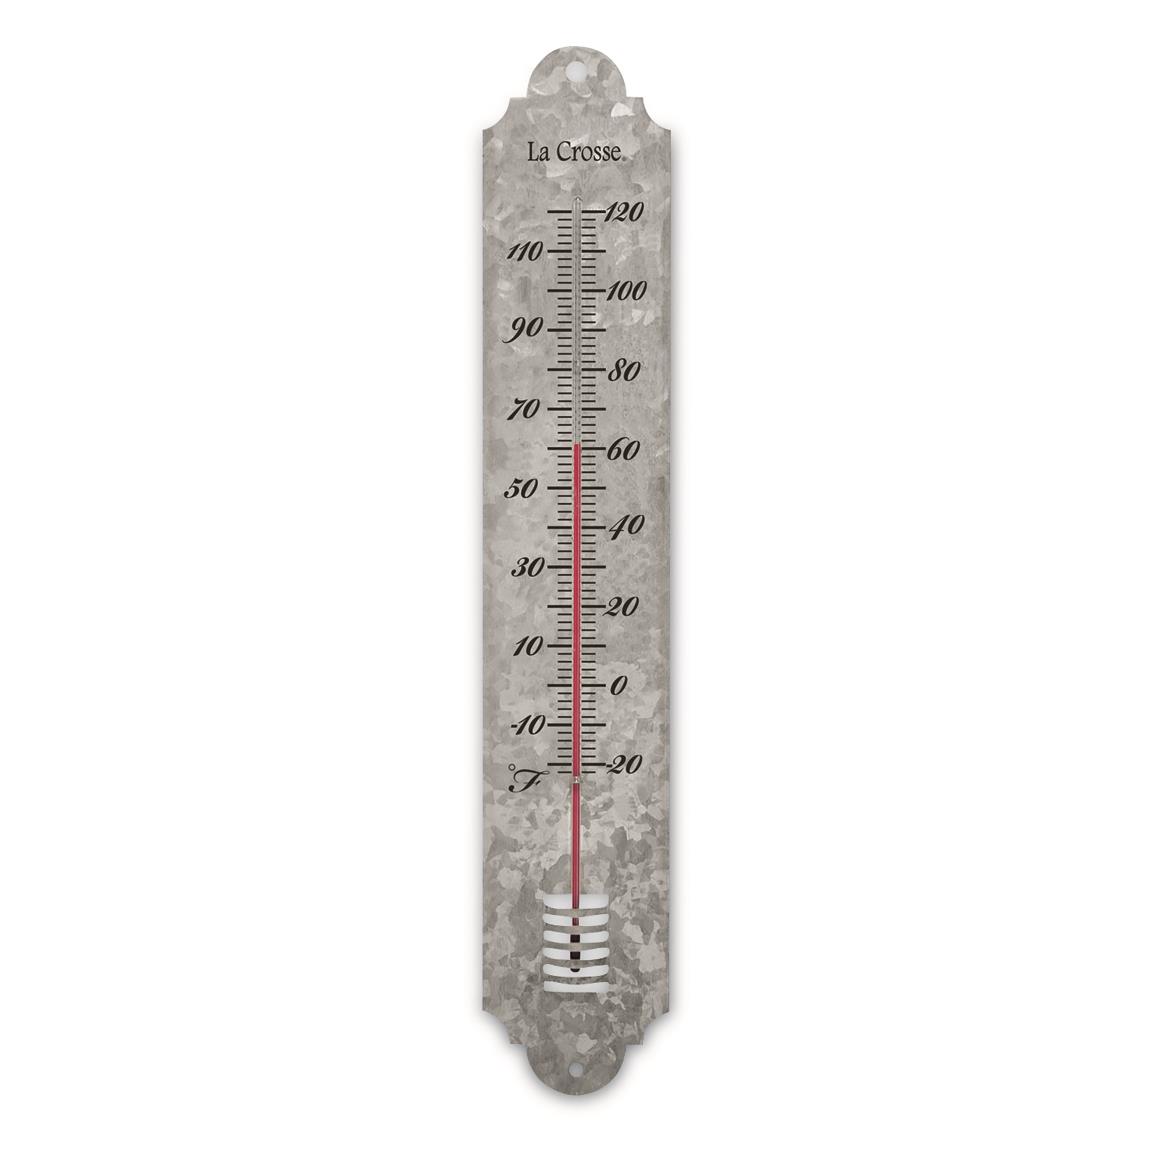 La Crosse Technology Galvanized Thermometer